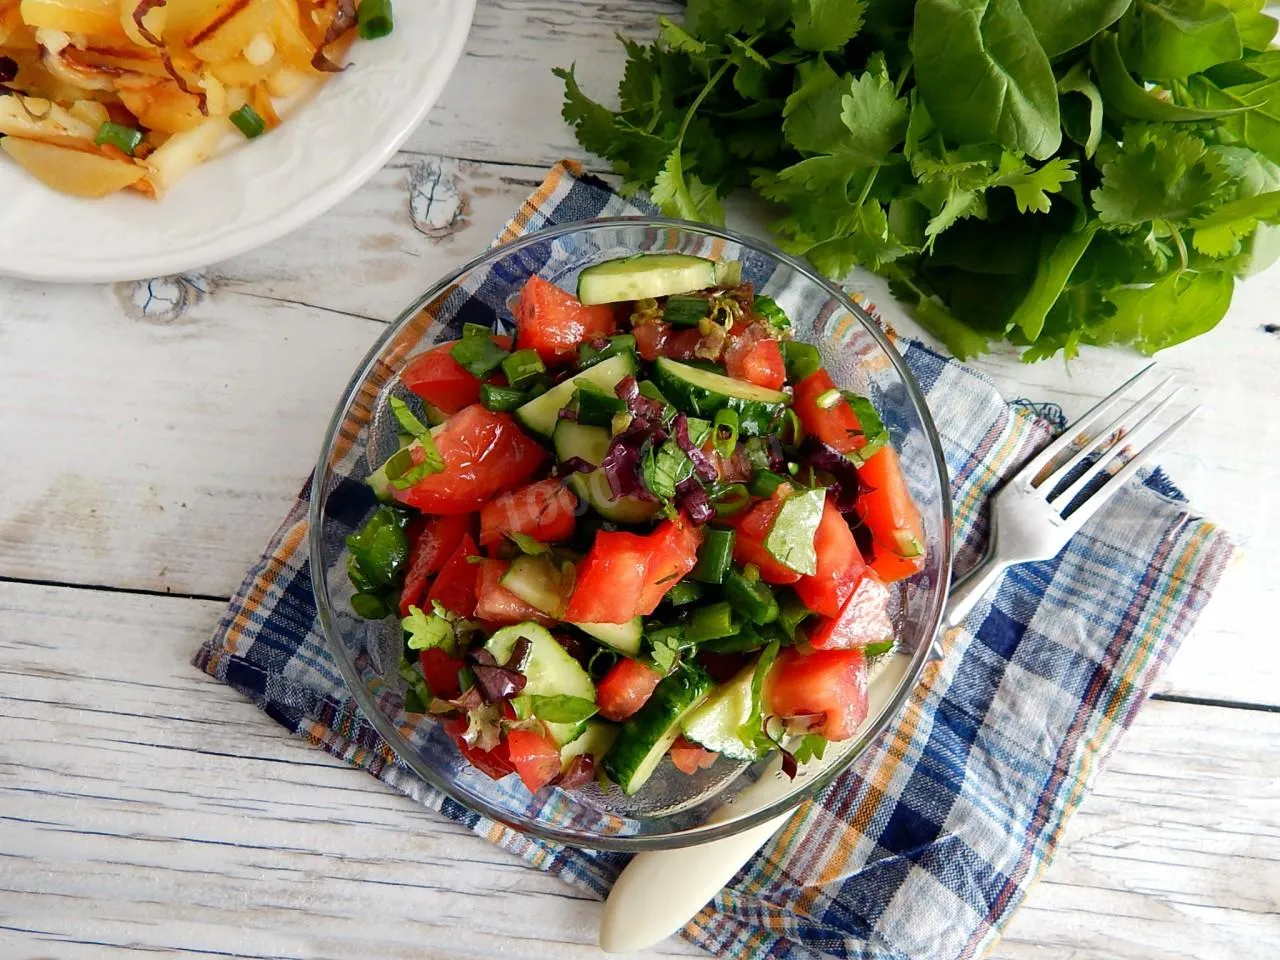 Салат помидоры огурцы зелень калорийность